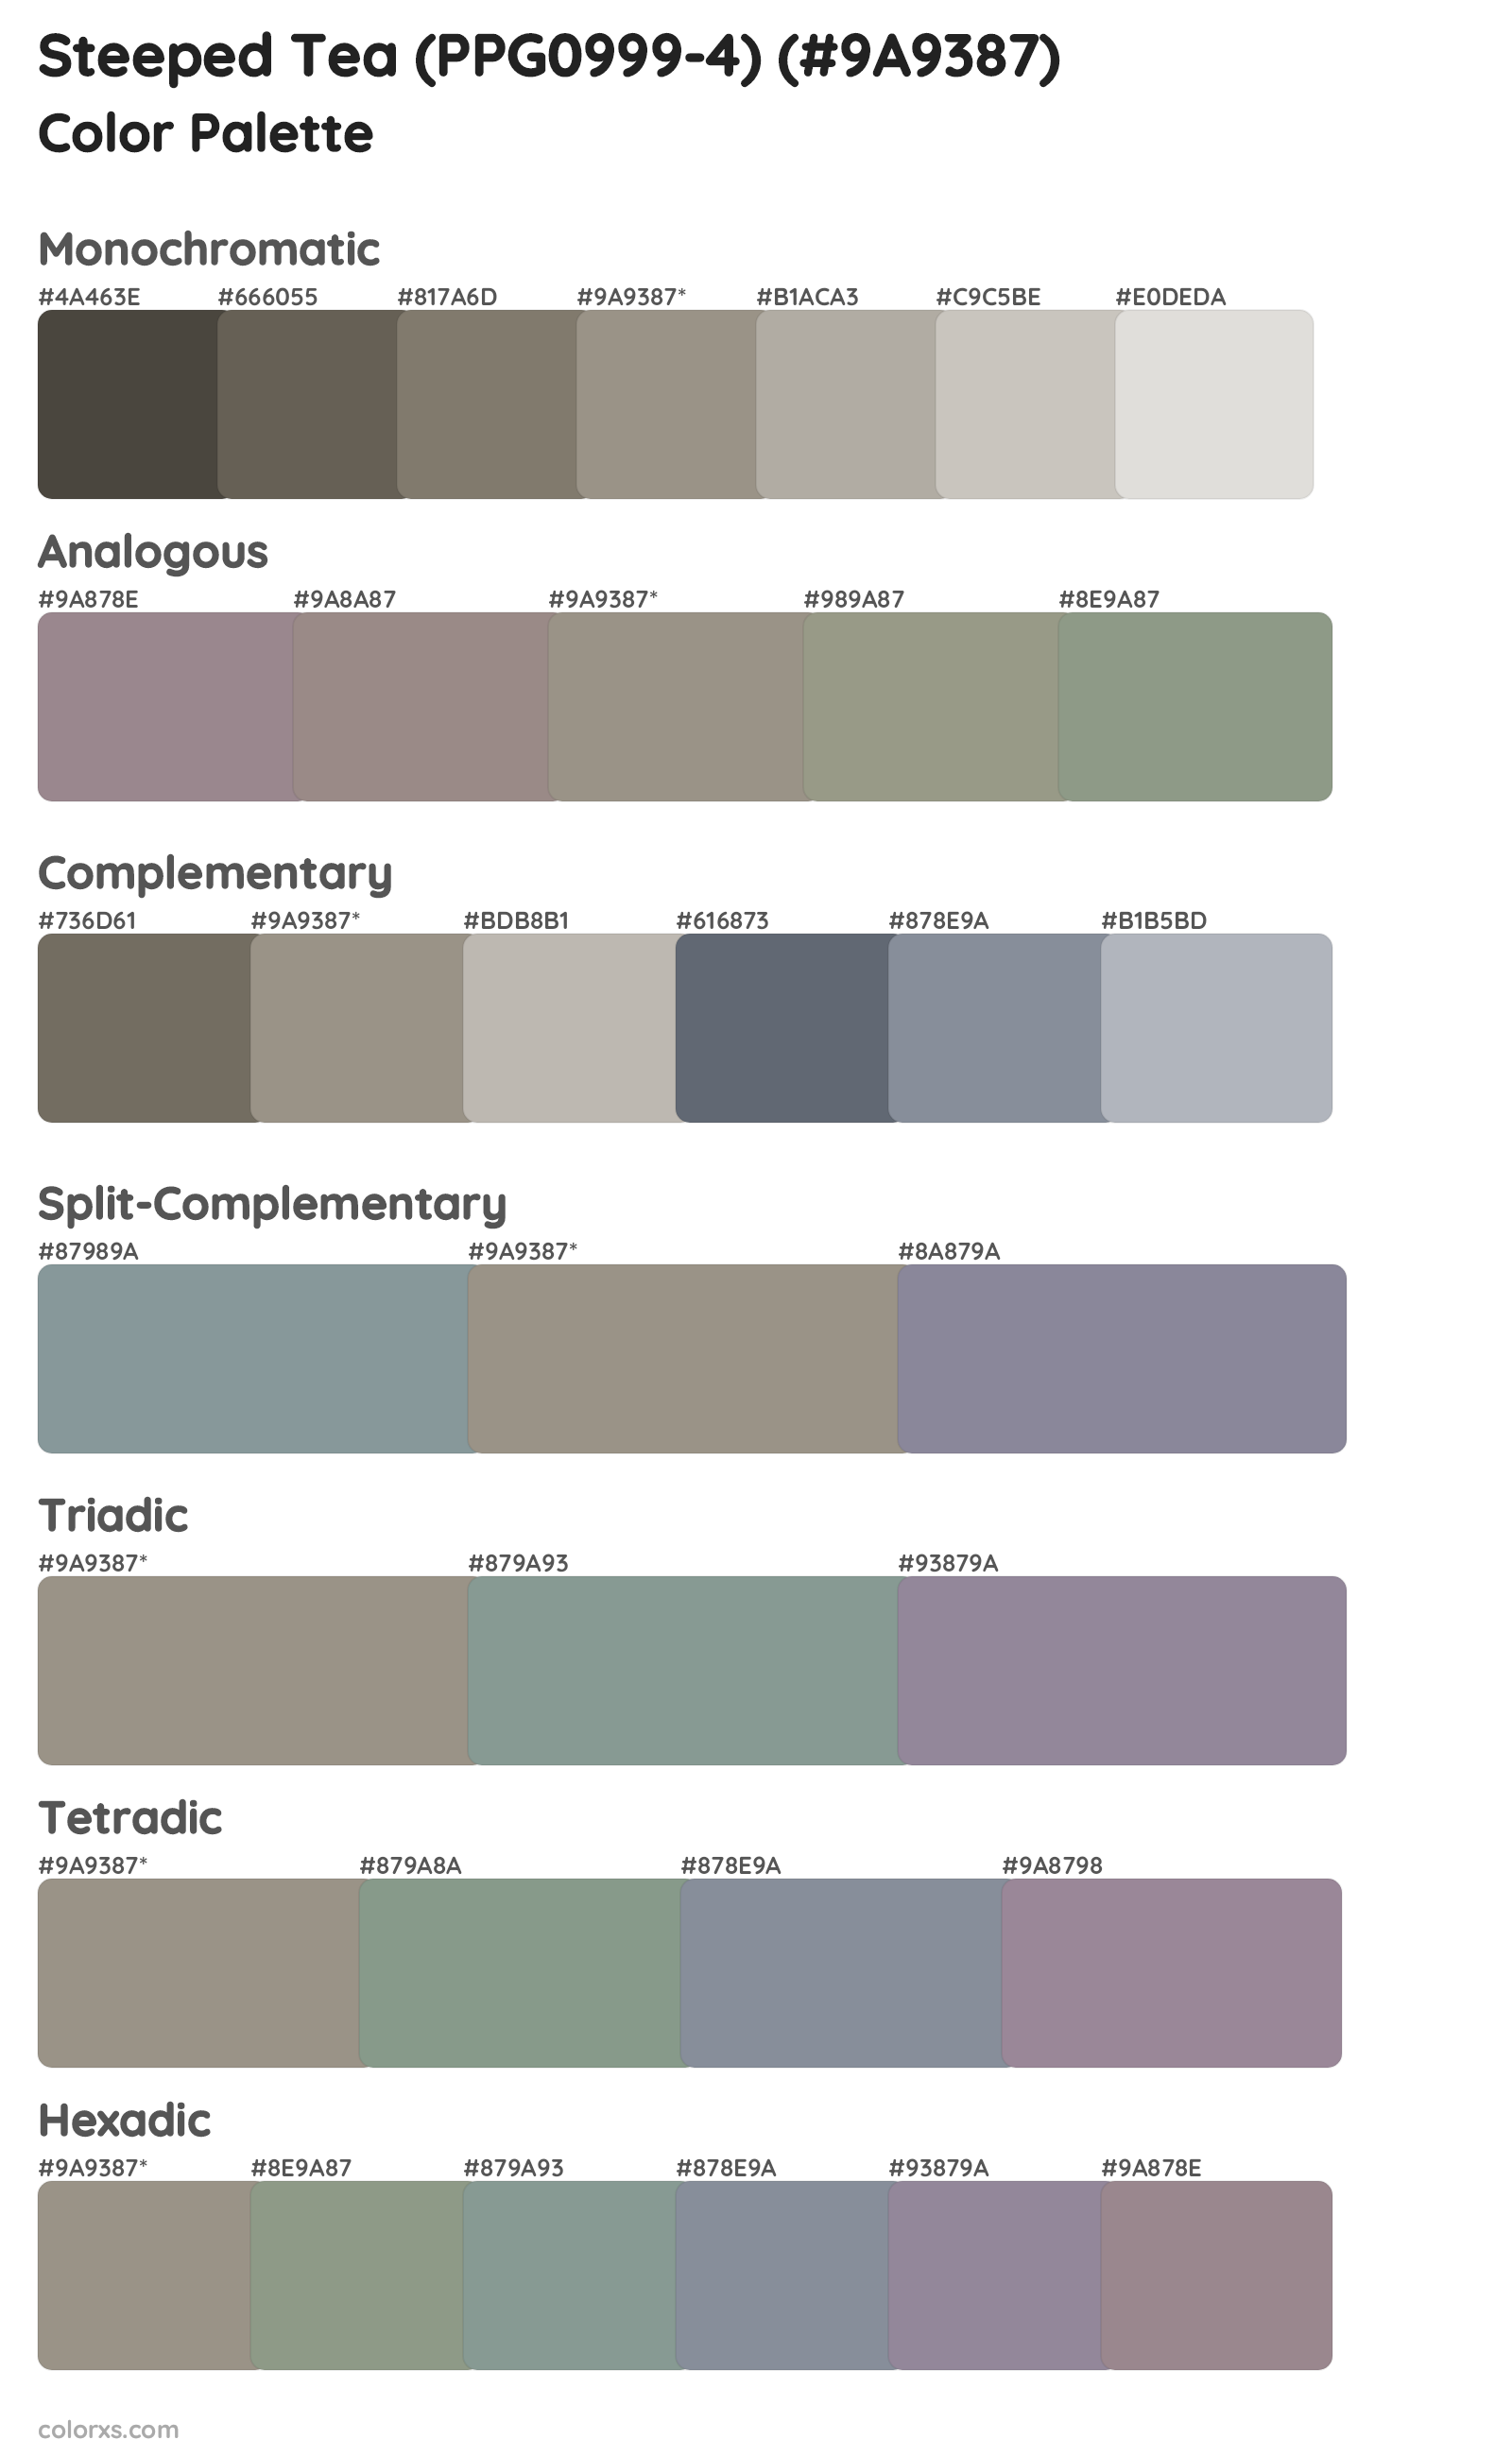 Steeped Tea (PPG0999-4) Color Scheme Palettes